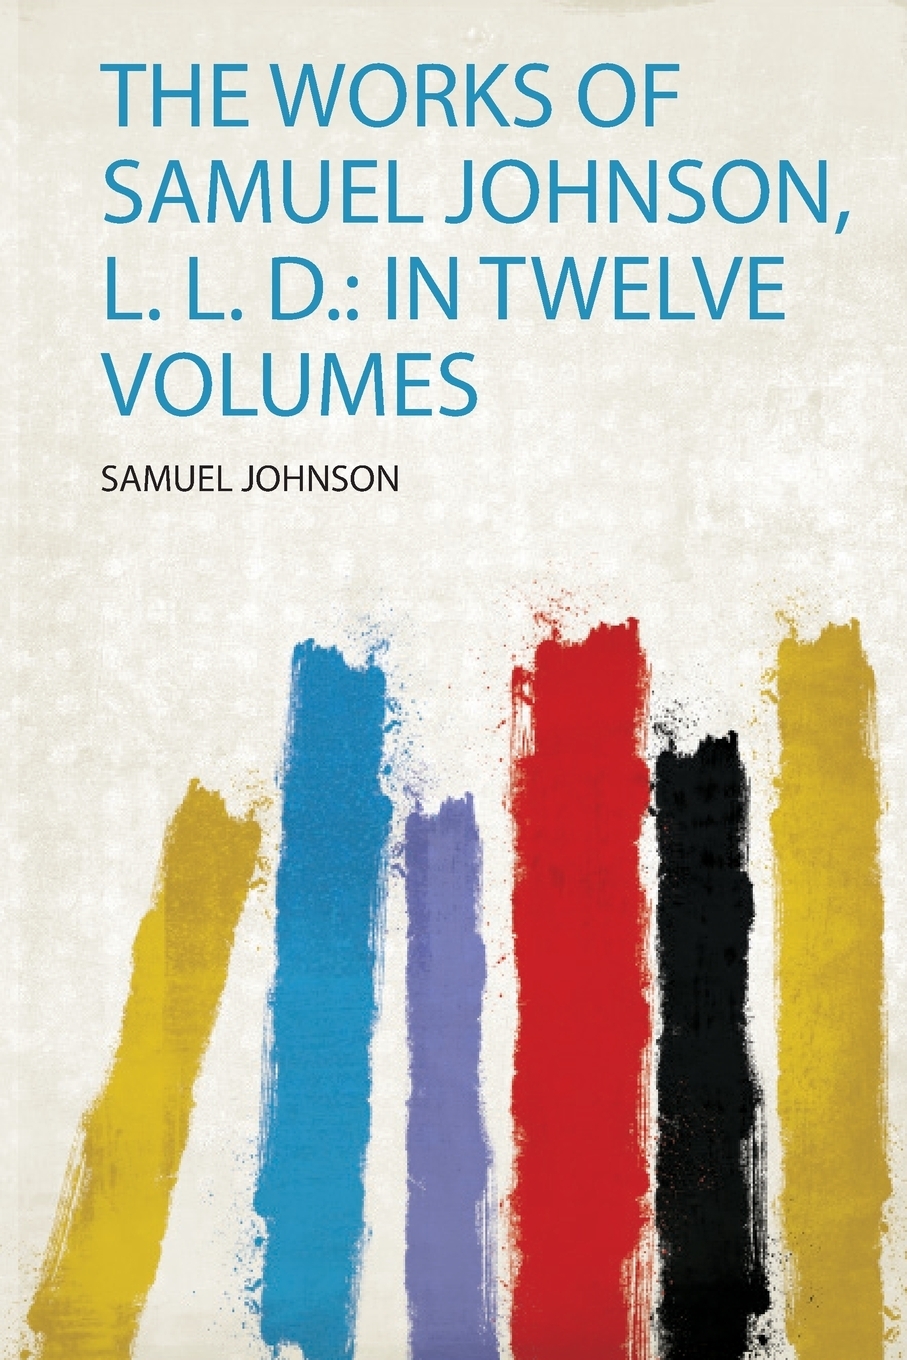 The Works of Samuel Johnson, L. L. D. in Twelve Volumes